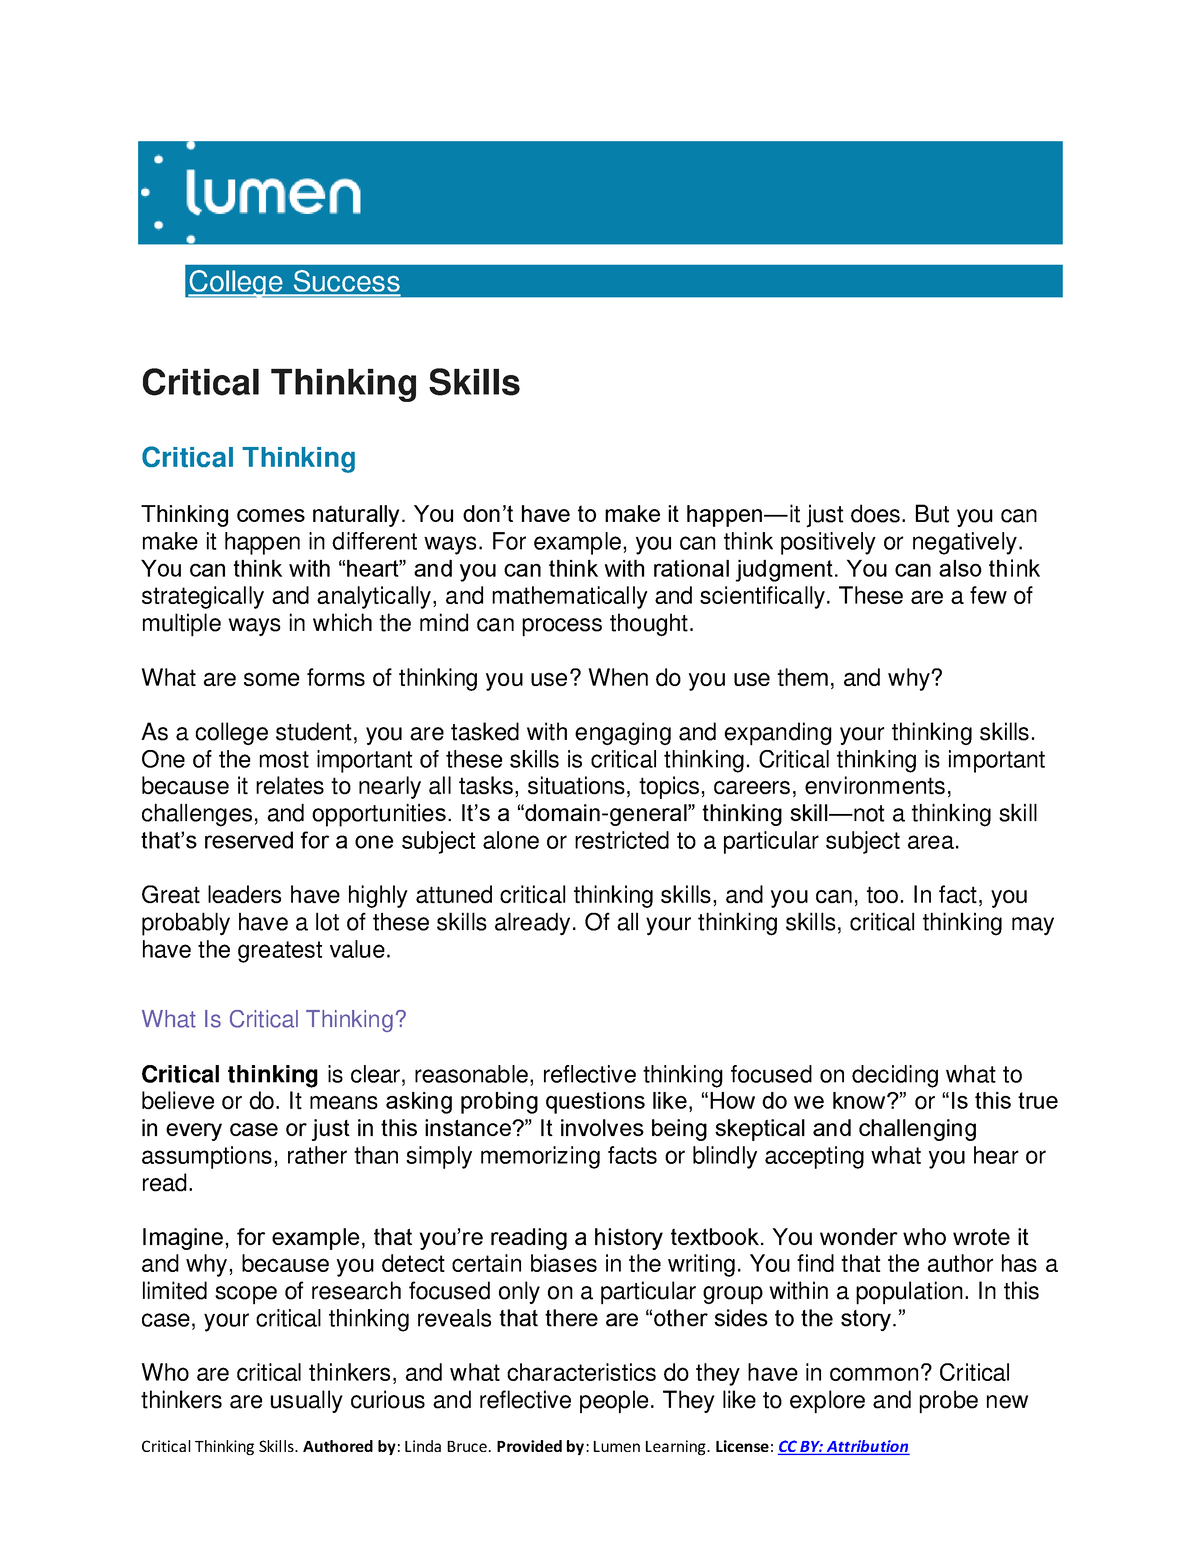 lumen learning critical thinking